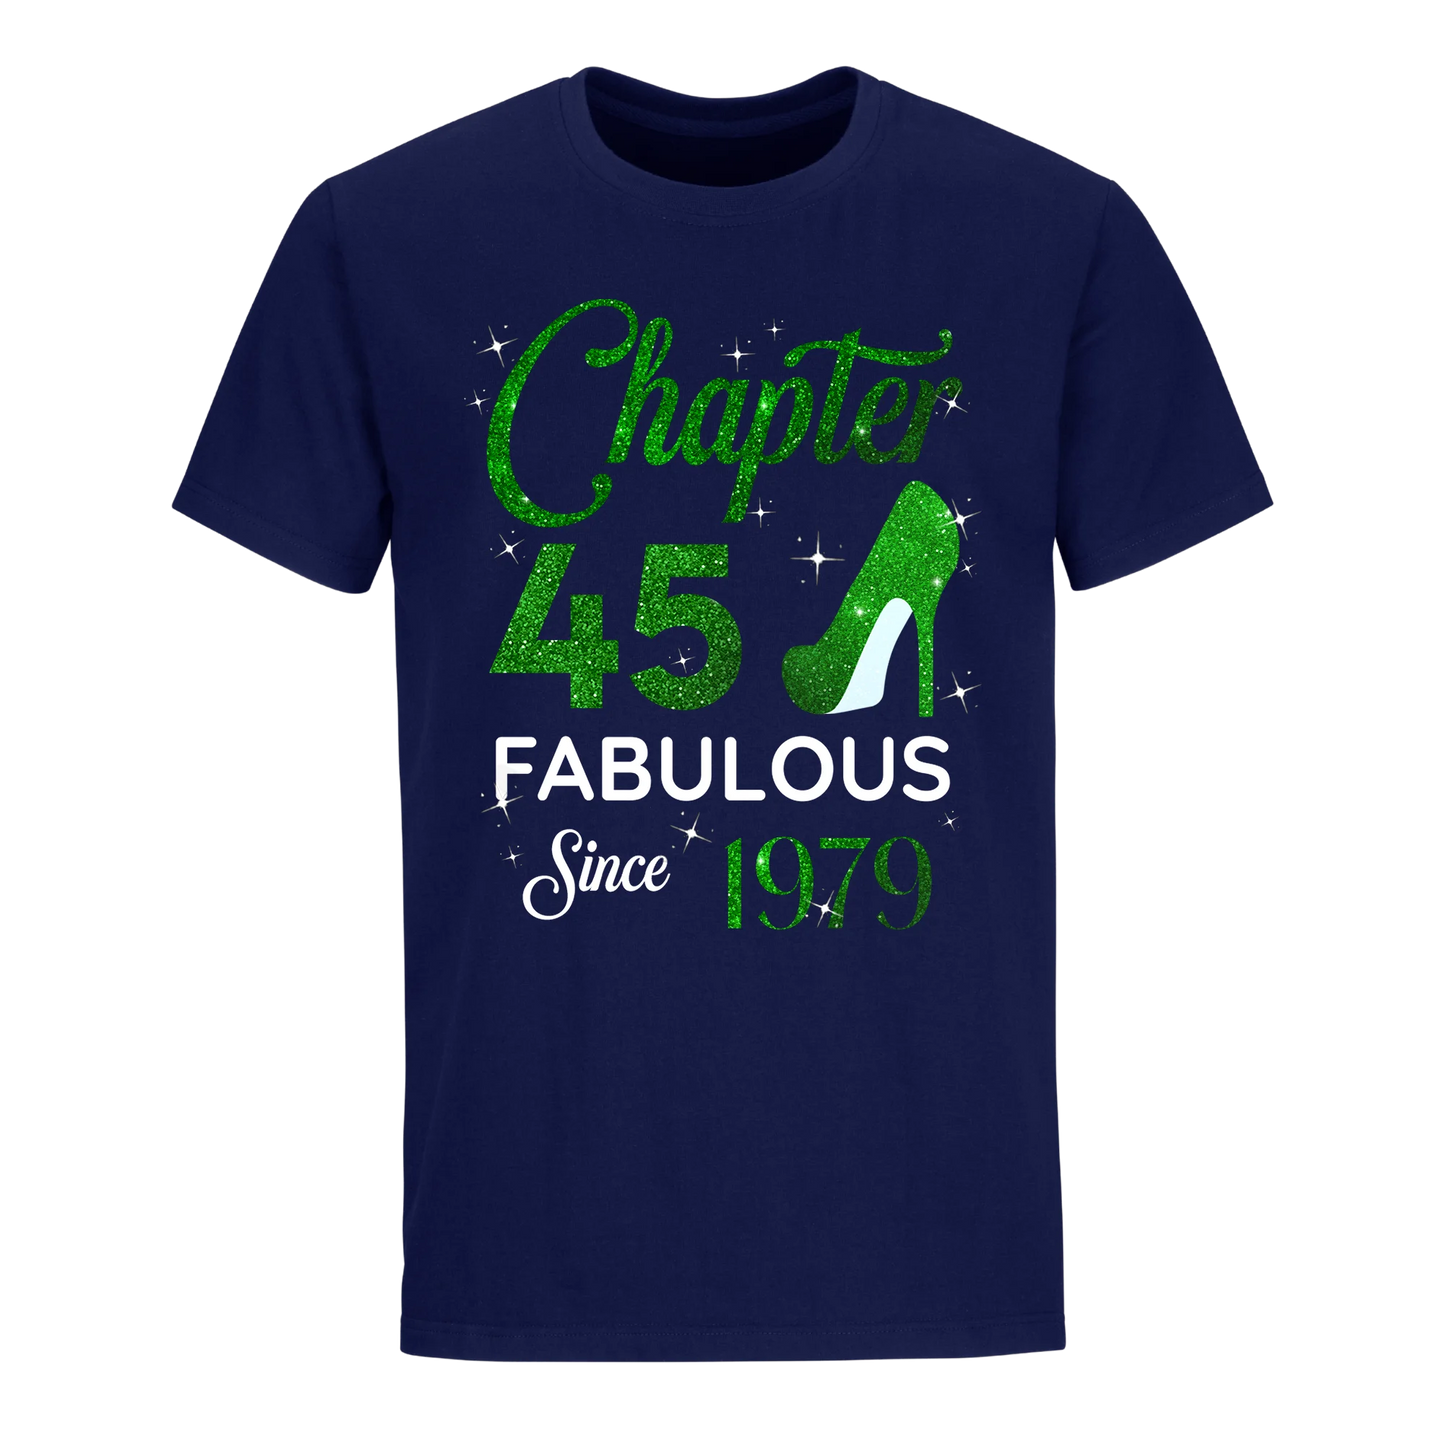 CHAPTER 45 FABULOUS SINCE 1979 UNISEX SHIRT GREEN